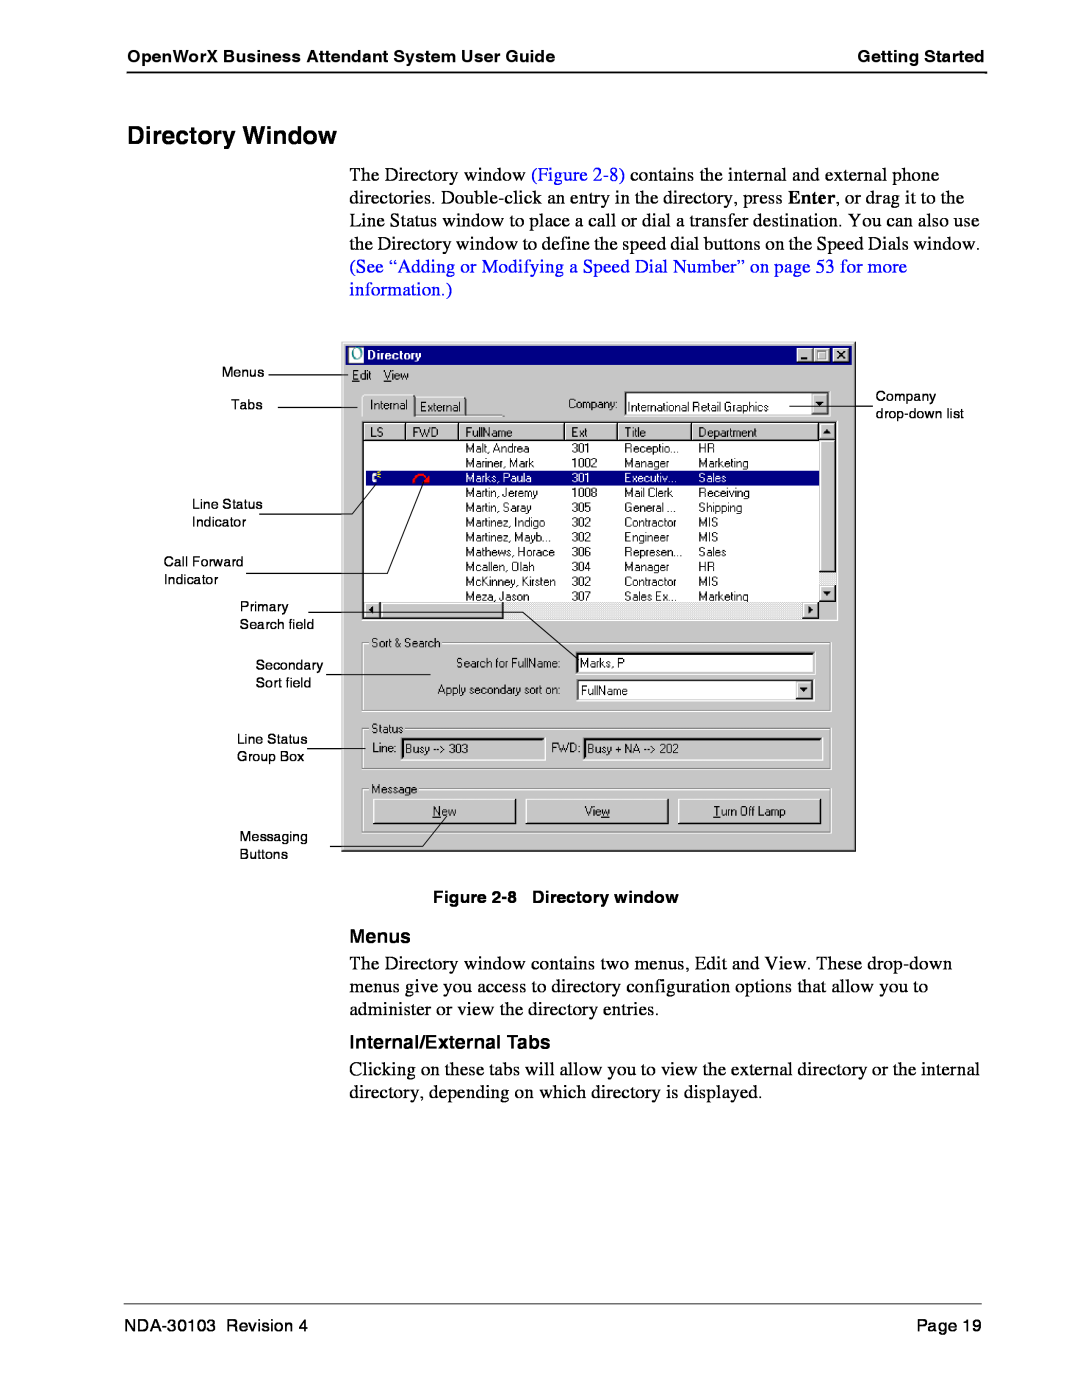 NEC NDA-30103-004 manual Directory Window, Menus, Internal/External Tabs 